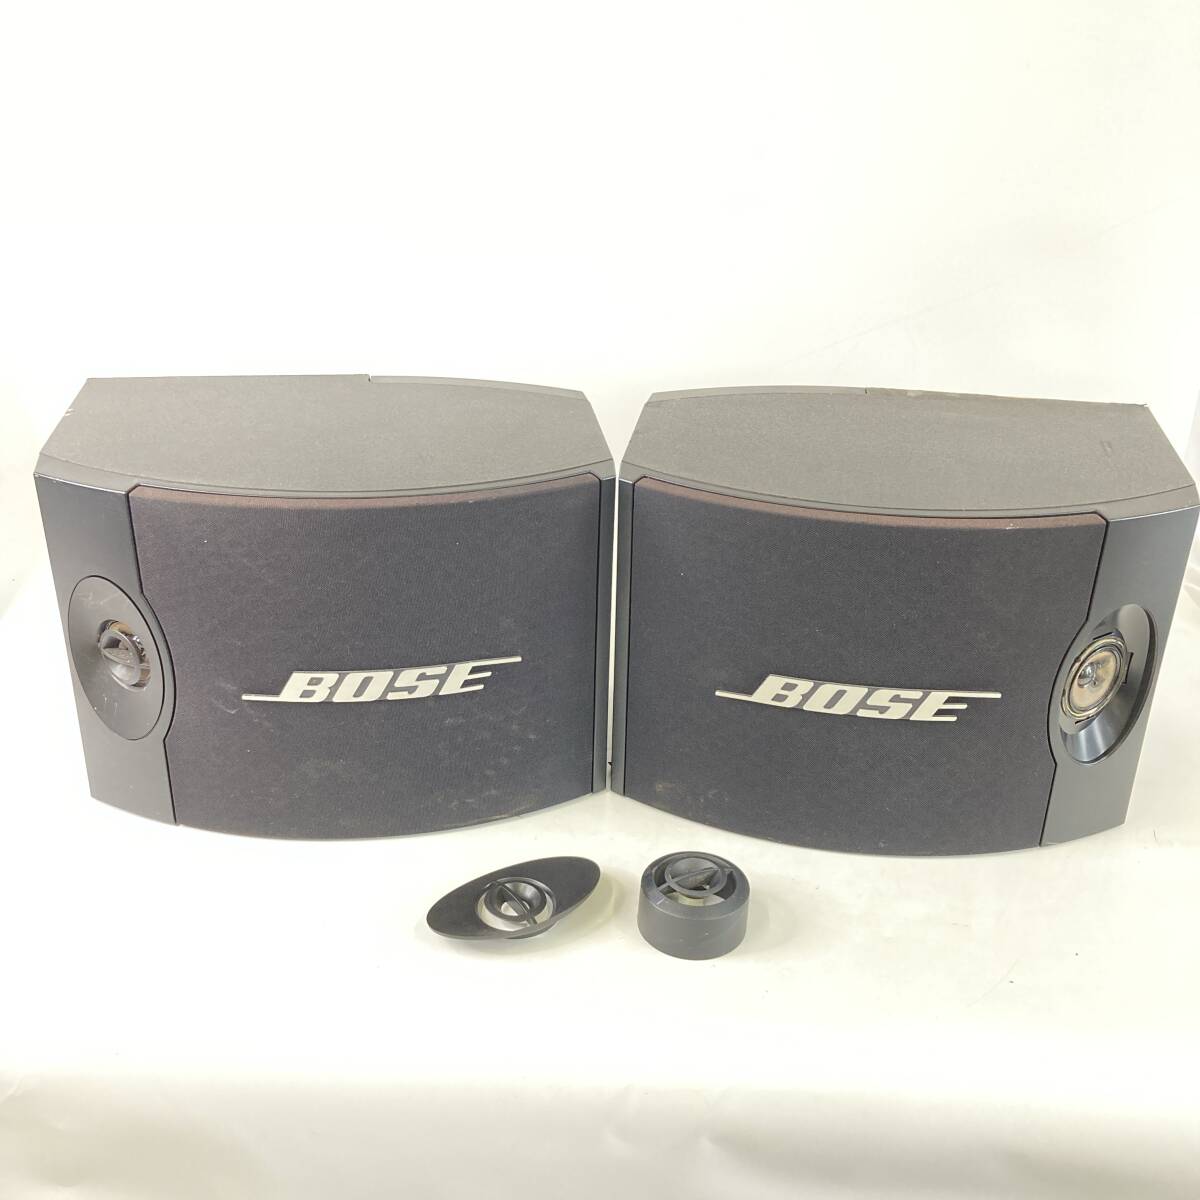 Bose 301 Series V Direct/Reflecting speakers ブックシェルフスピーカー (2台1組) ブラック 1円 動作確認済の画像1